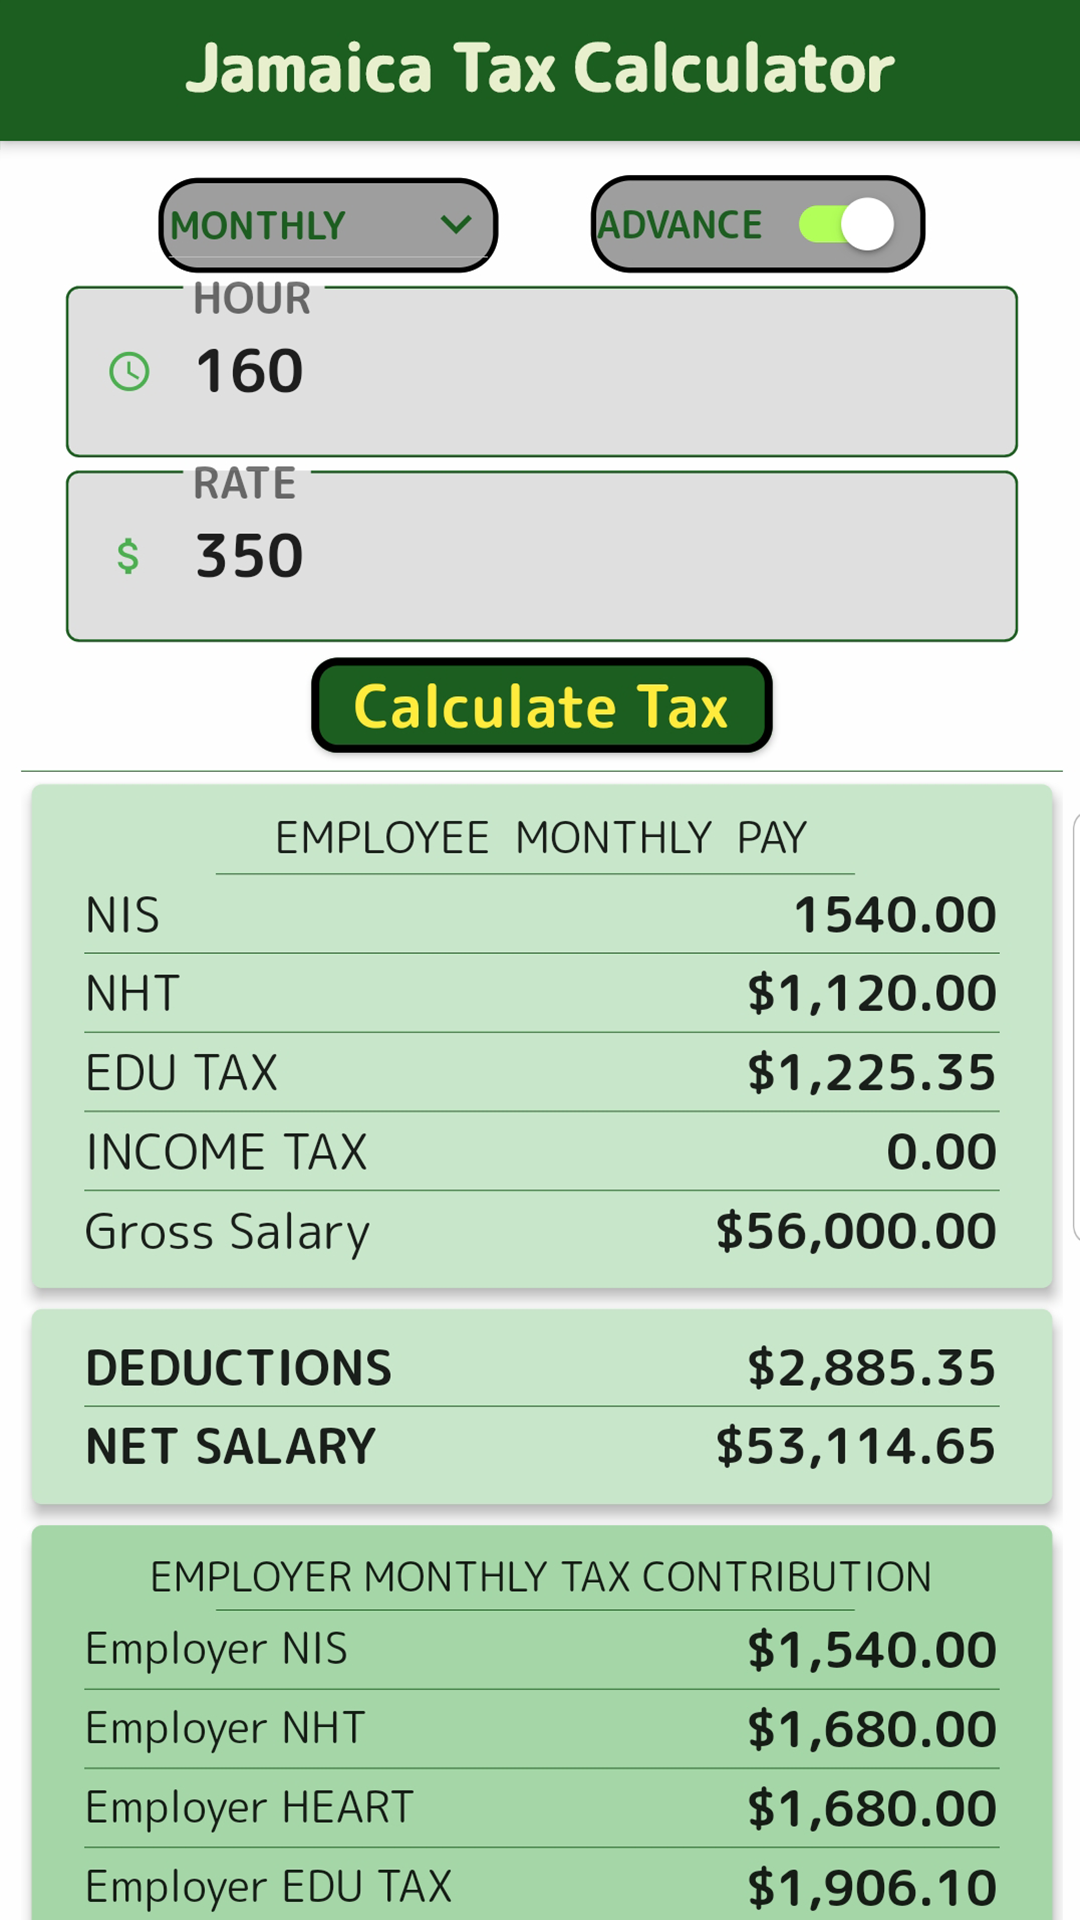 Jamaica Tax Calculator It's All Widgets!